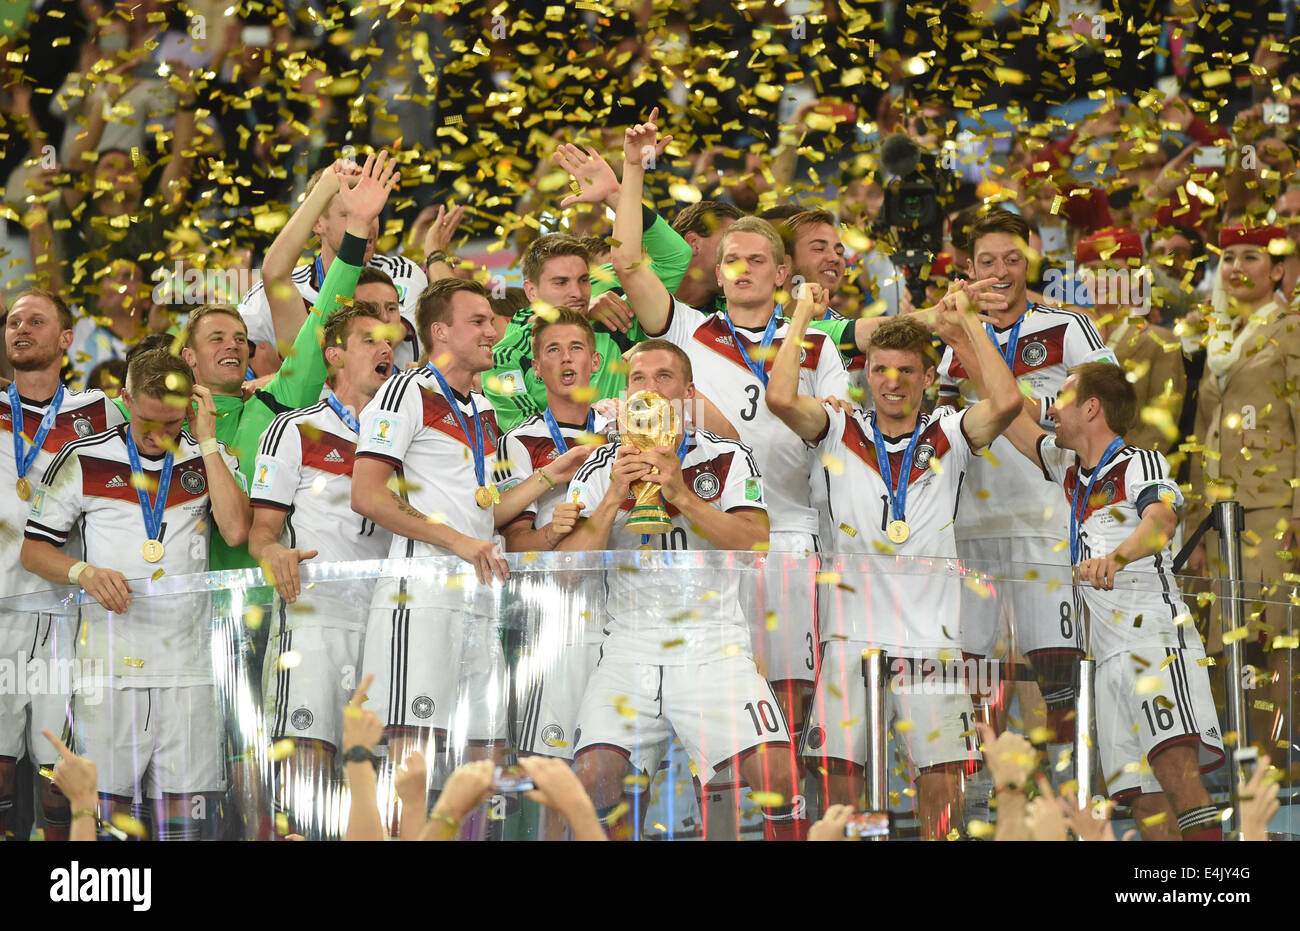 295 Presents Fifa World Cup 2014 Team Stock Photos, High-Res